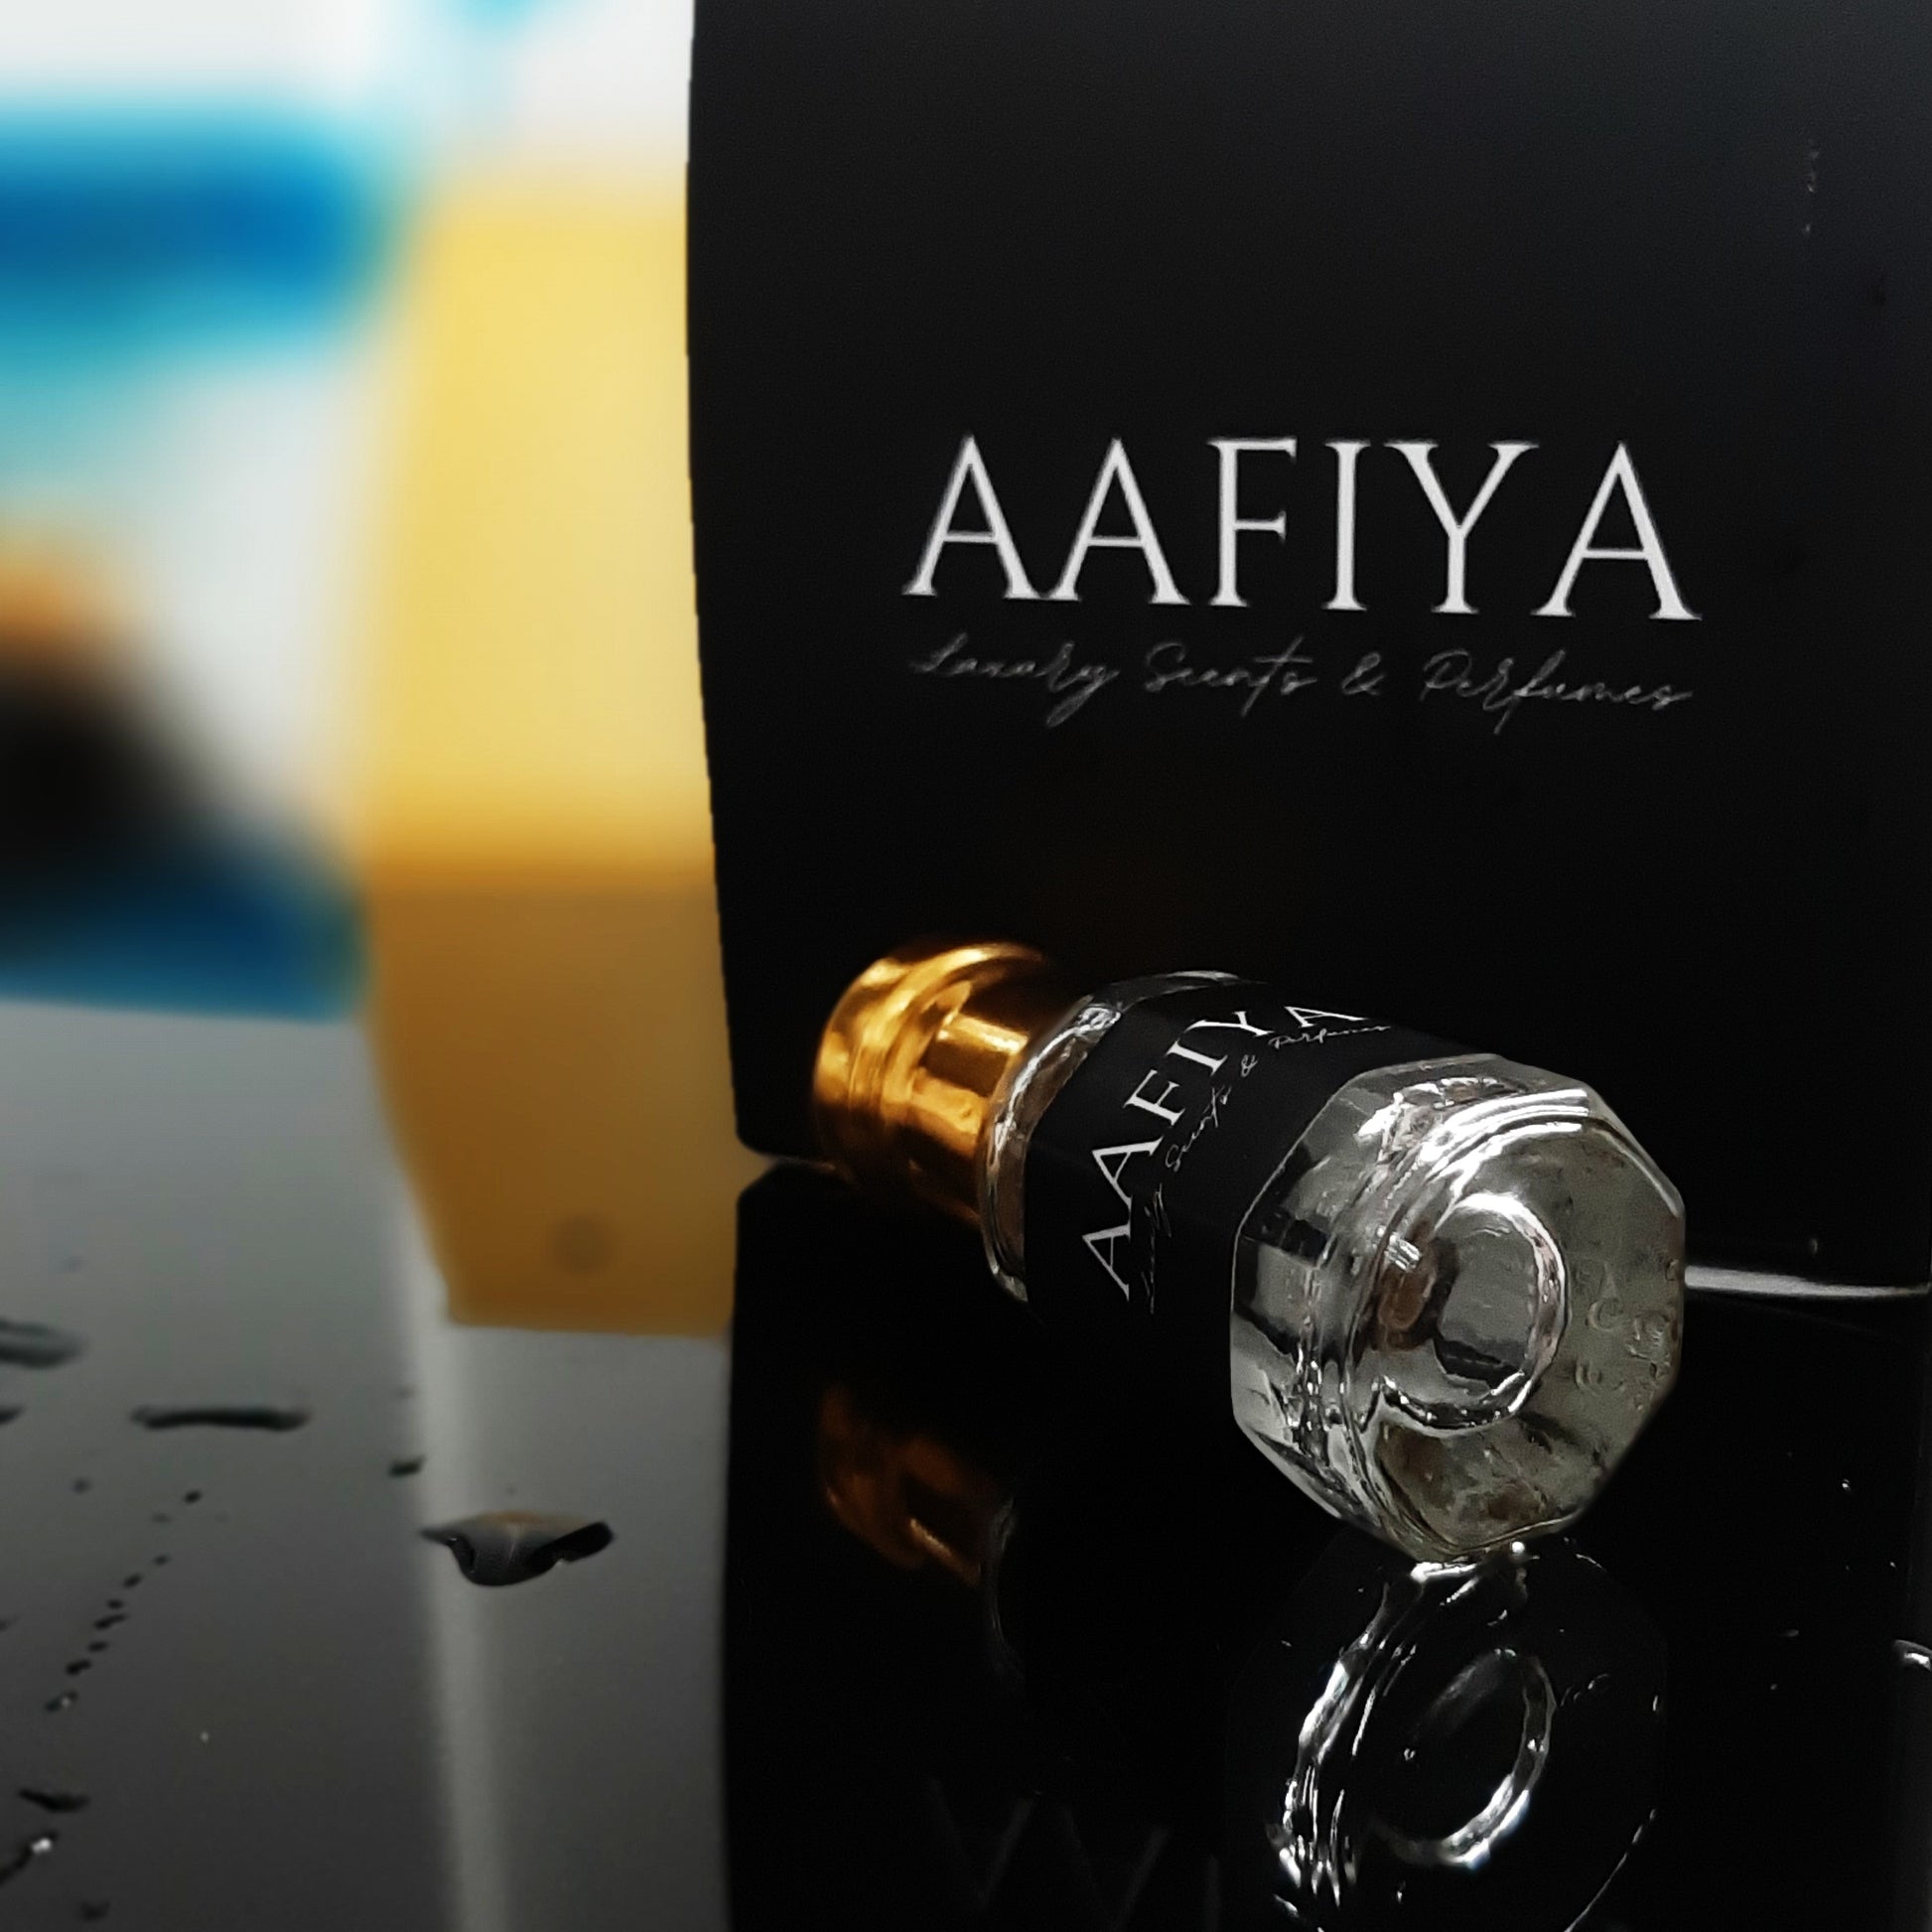 Clive Christian - Aafiya Luxury Scents & Perfumes